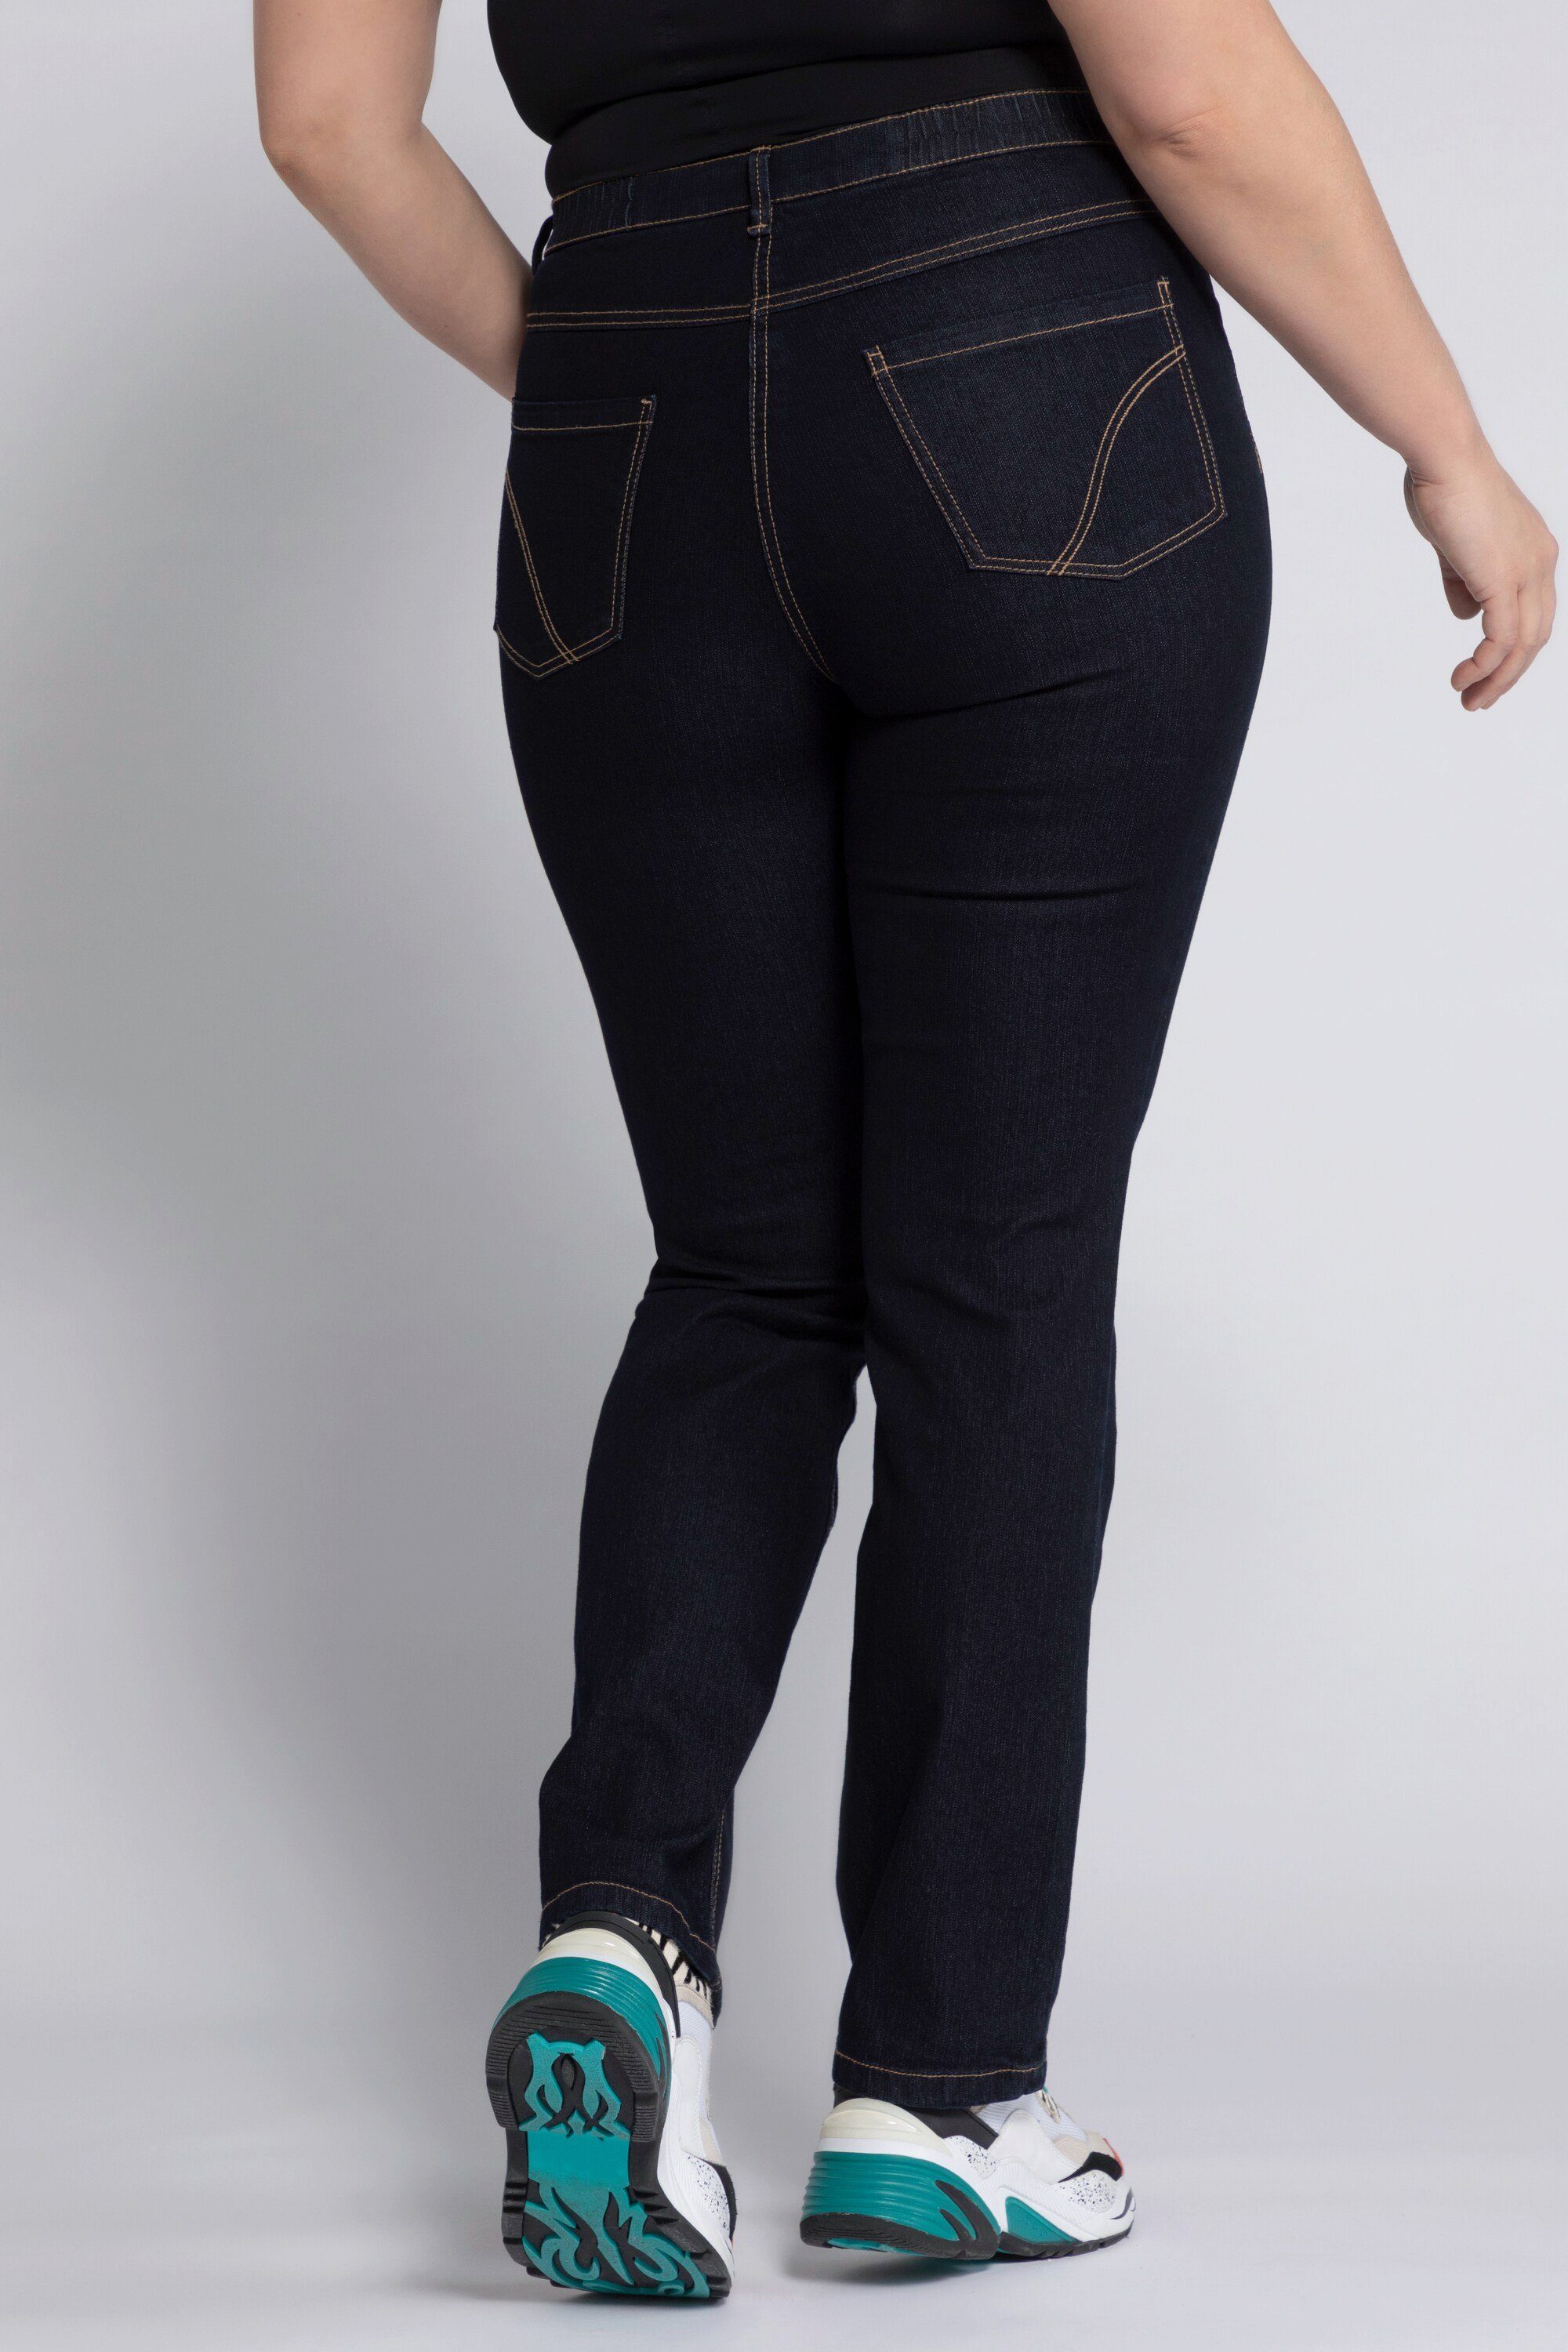 5-Pocket-Form Bein denim Jeans Stretch Ulla gerades Popken Mandy blue Funktionshose dark